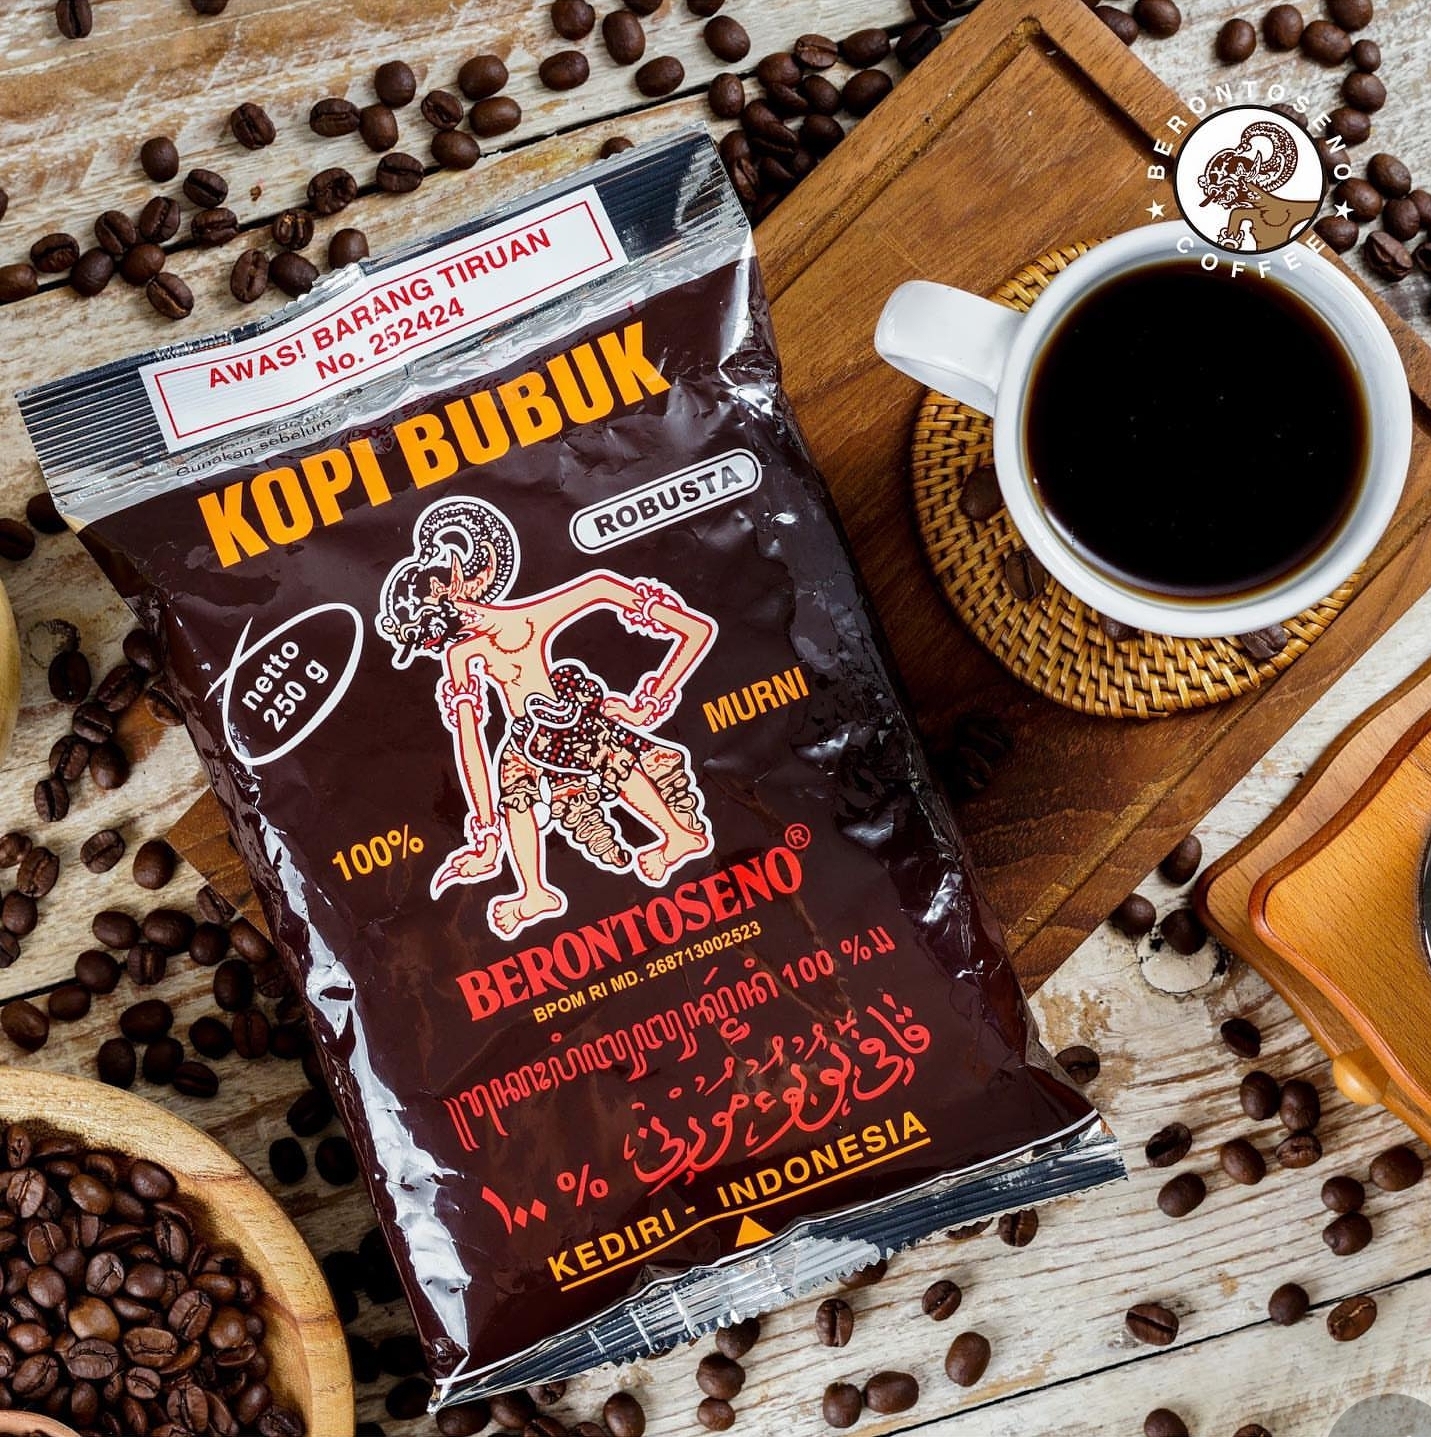 Warung Kopi Brotoseno - Coffee Shop Recommend!